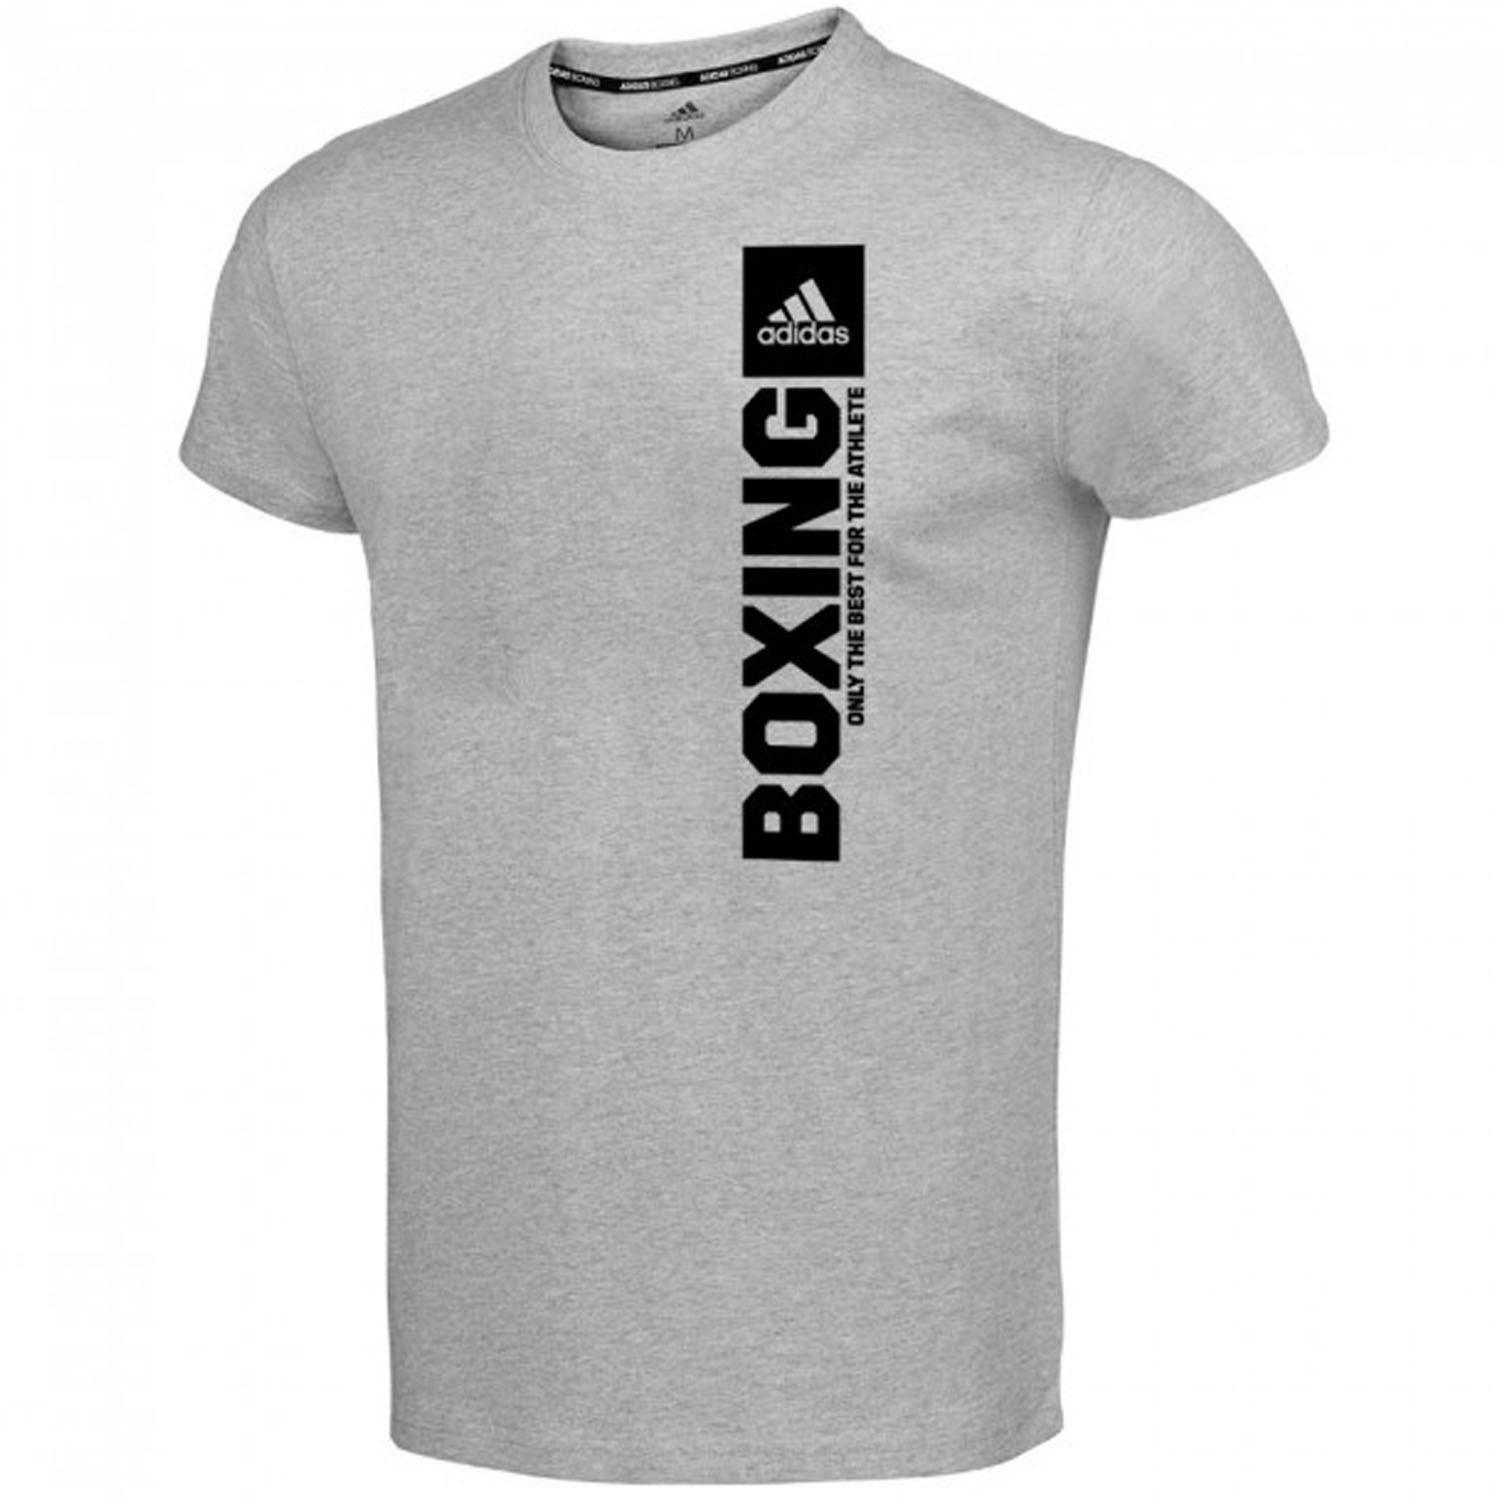 adidas T-Shirt, Community Vertical Boxing, grey, XL